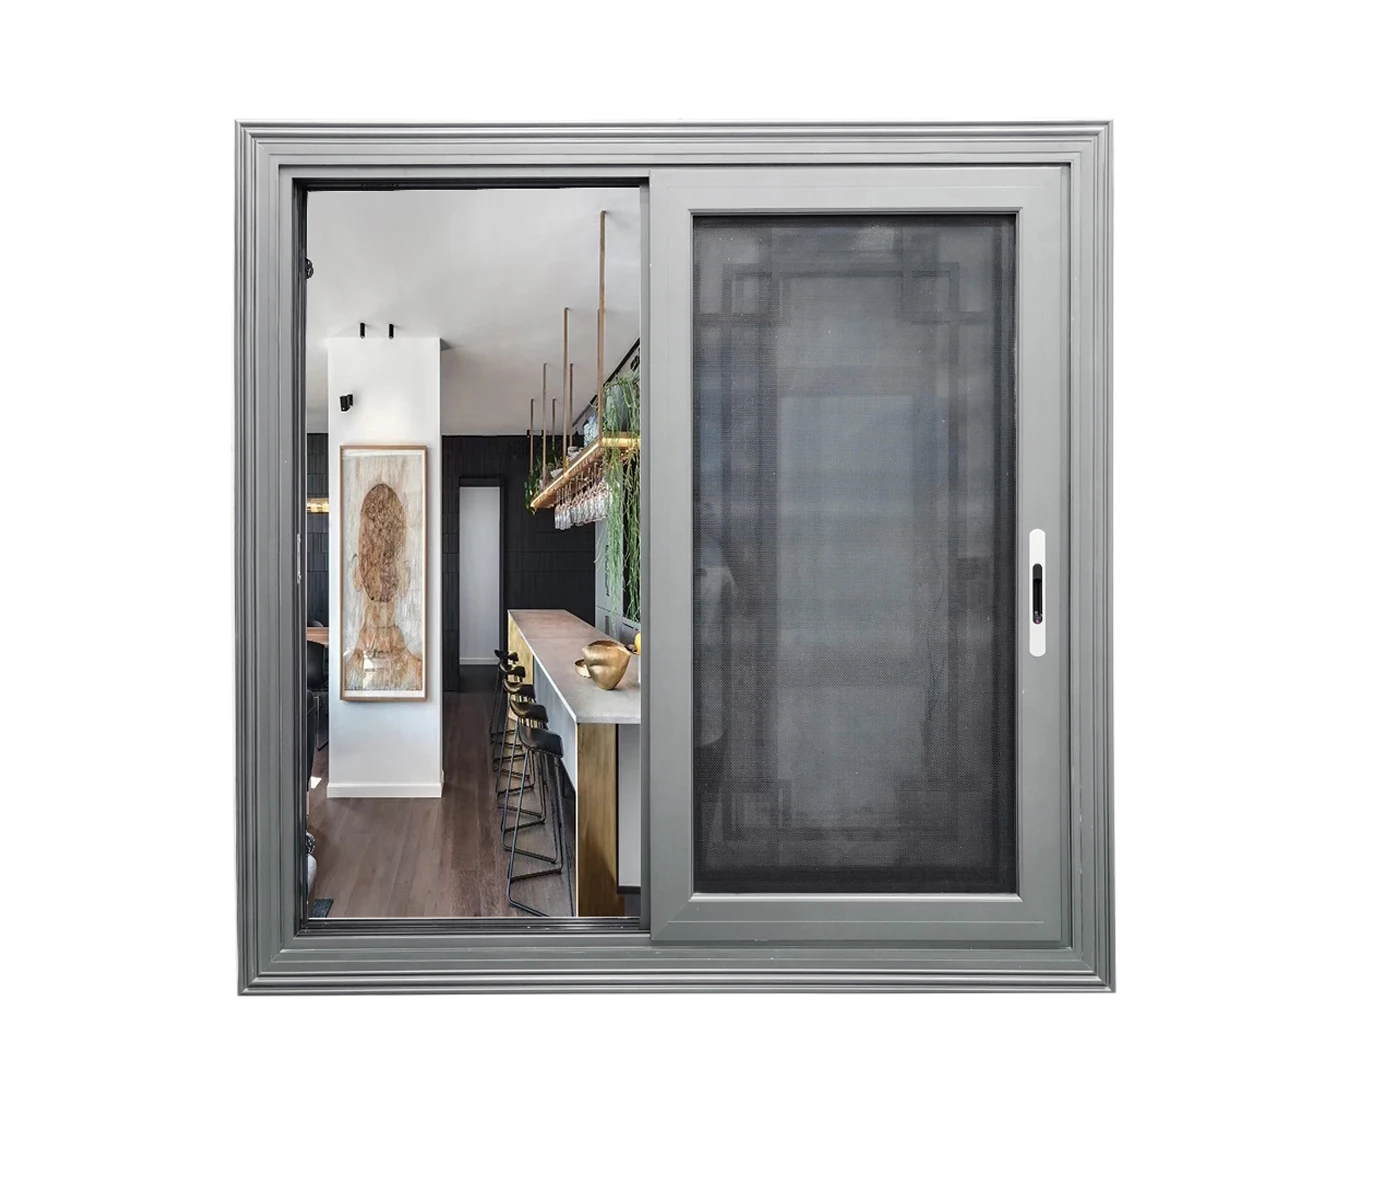 Hiseng  contemporary security home aluminum sliding window